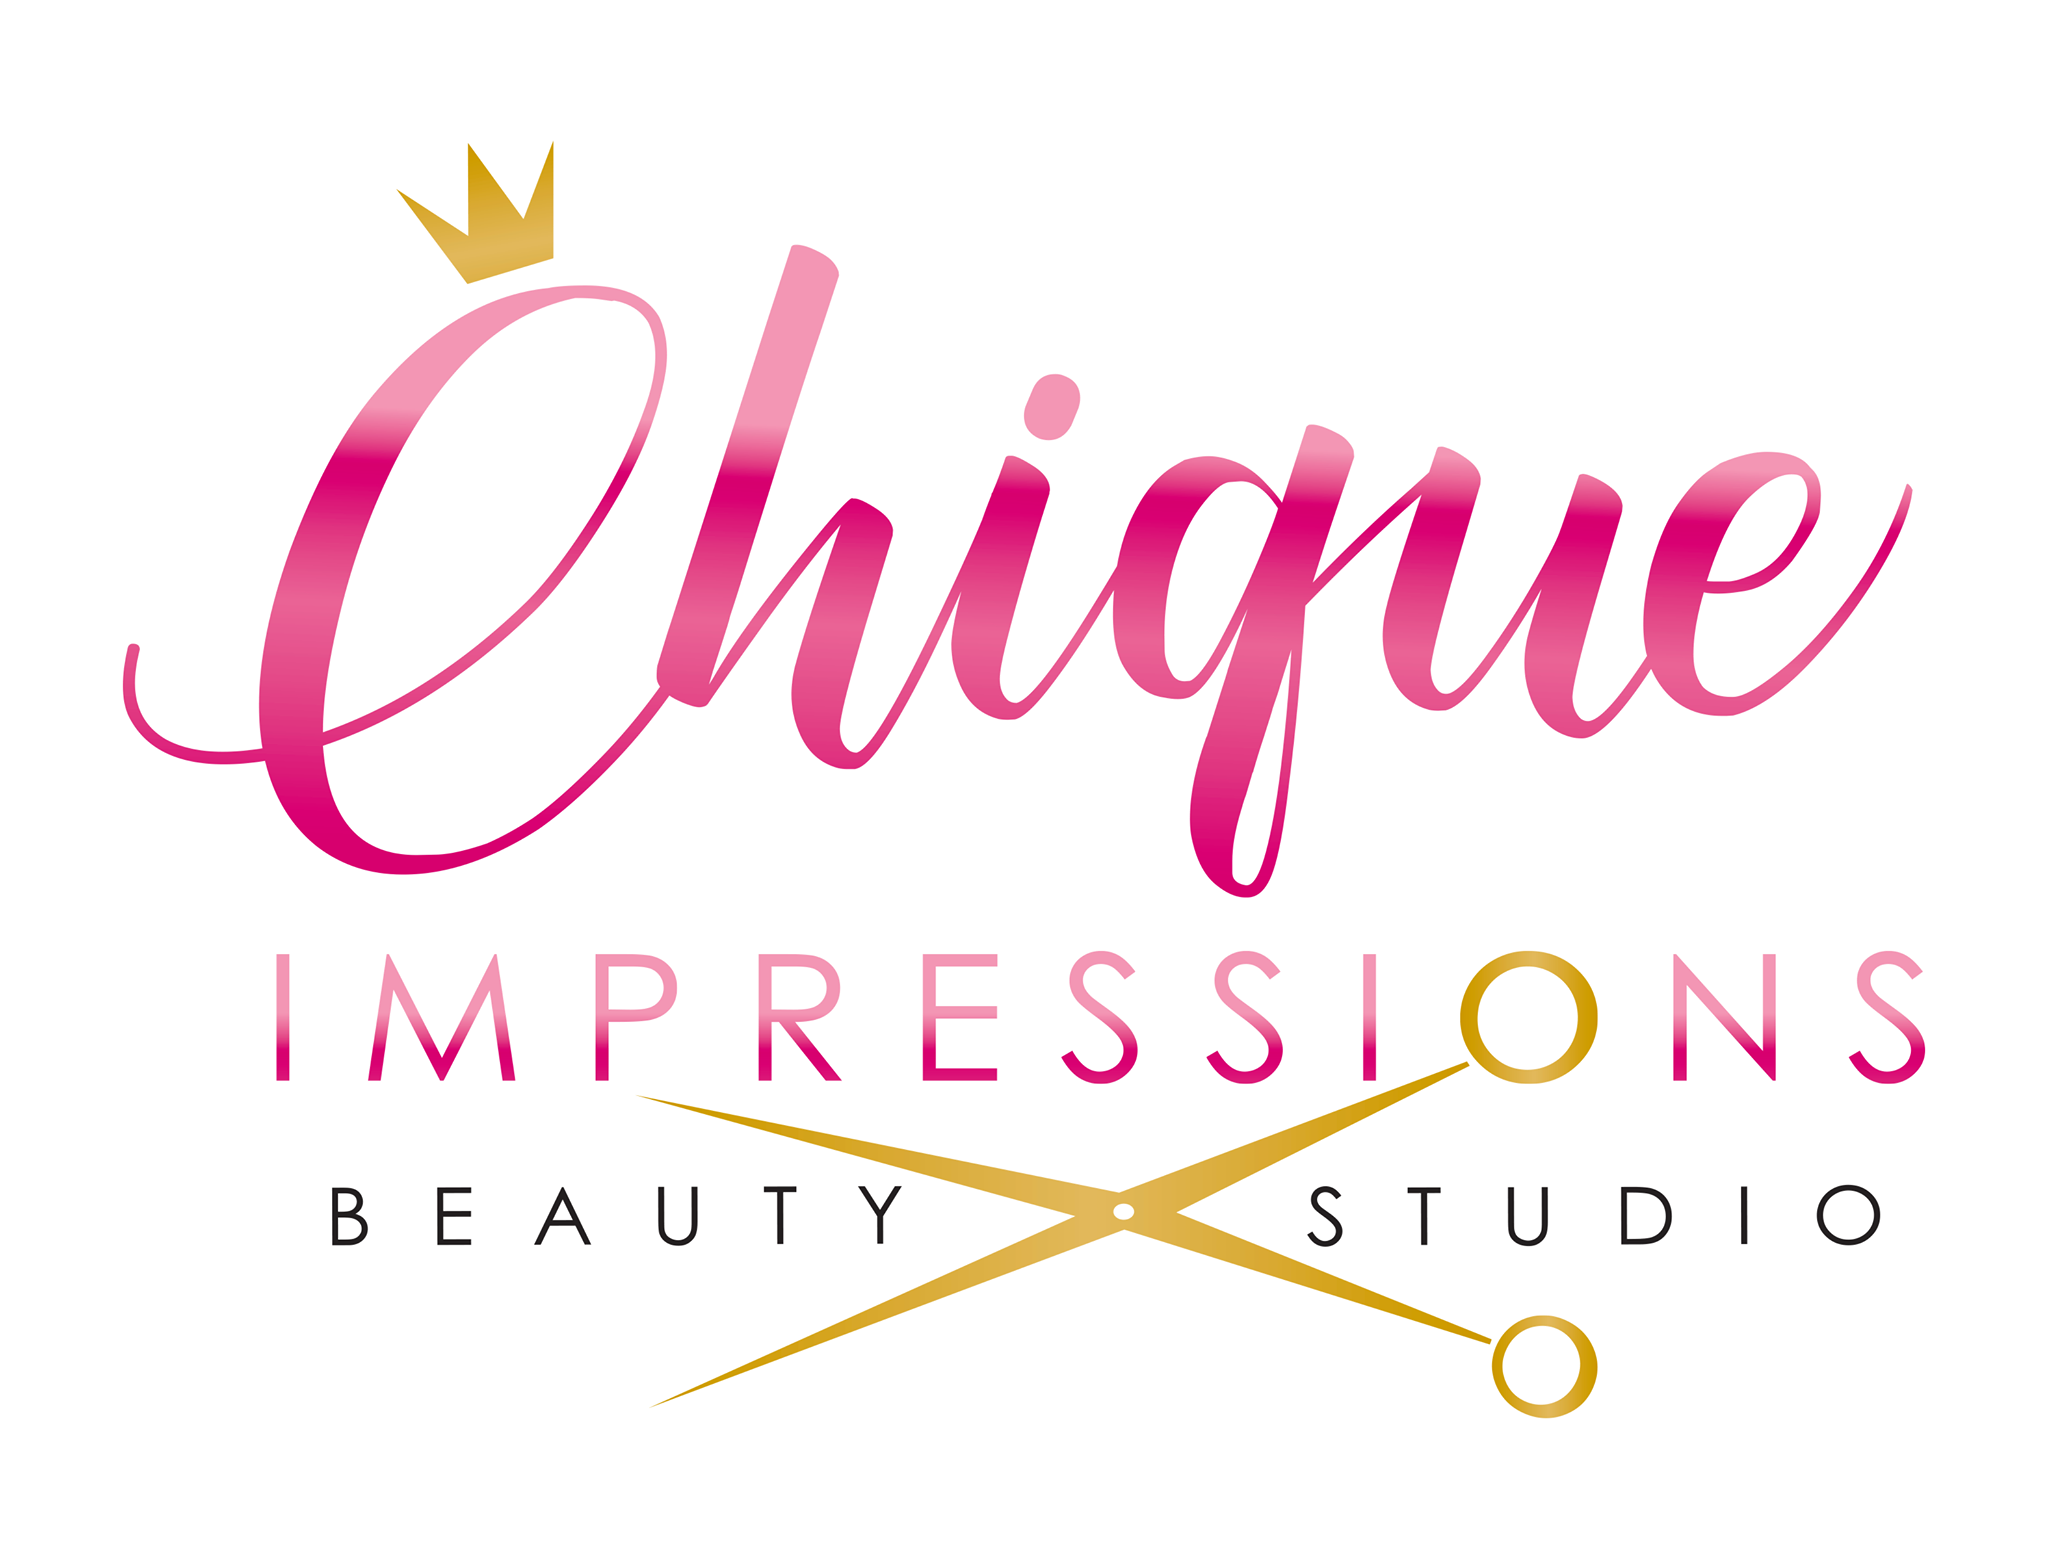 Business logo of Chique Impressions Beauty Studio